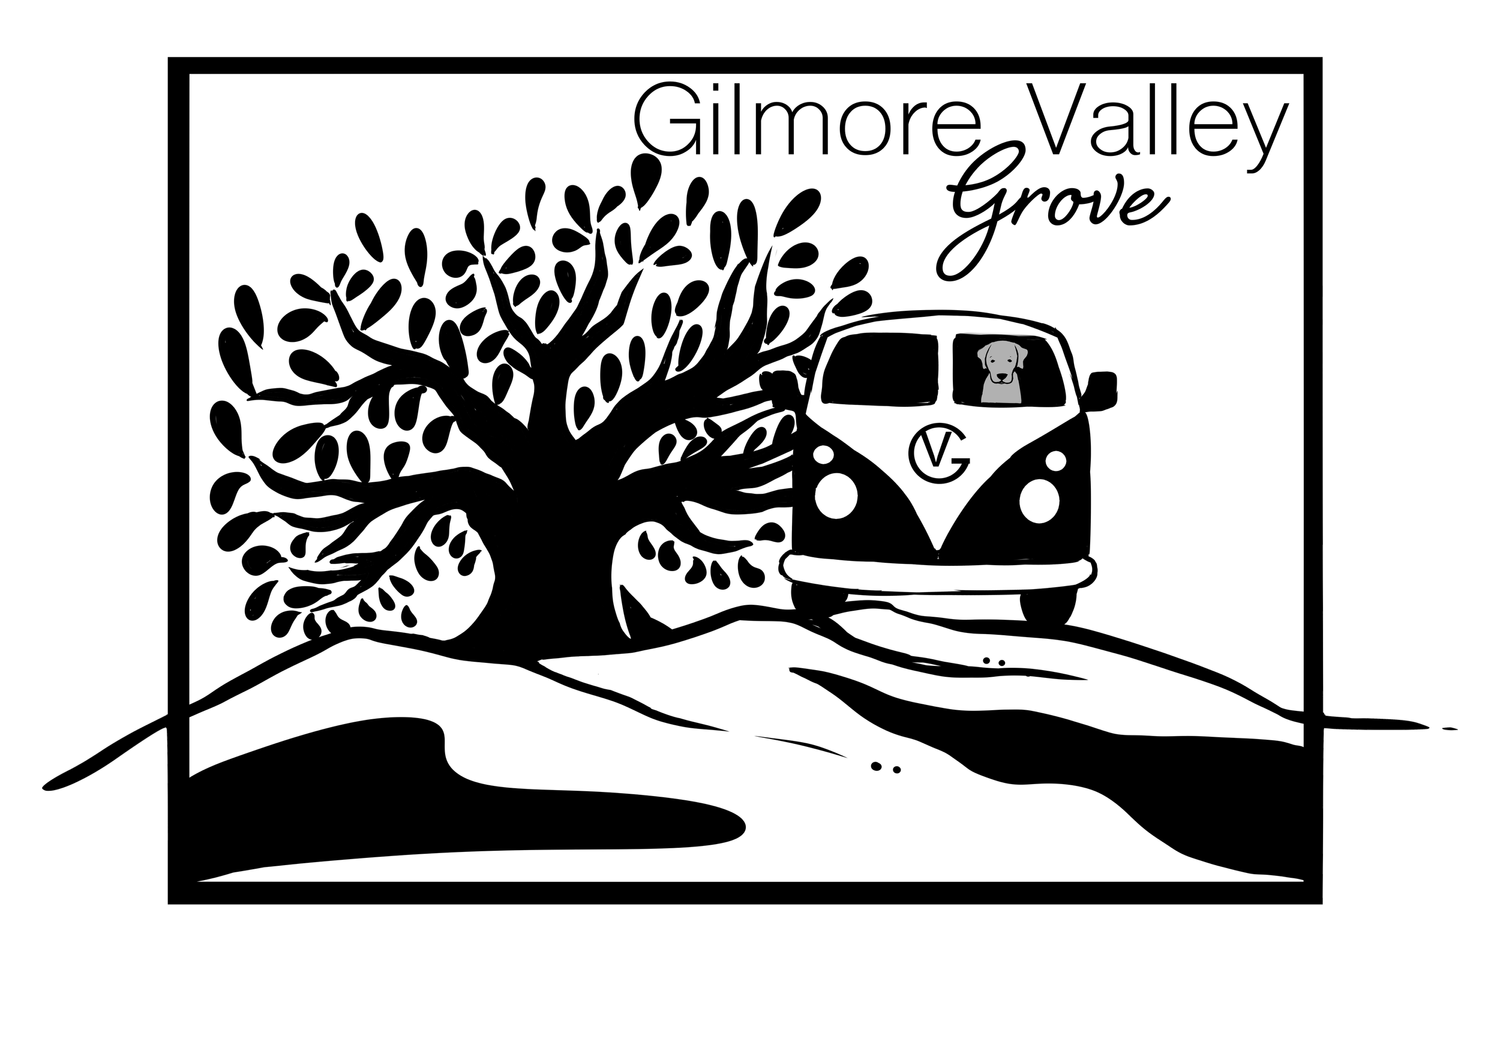 Gilmore Valley Grove